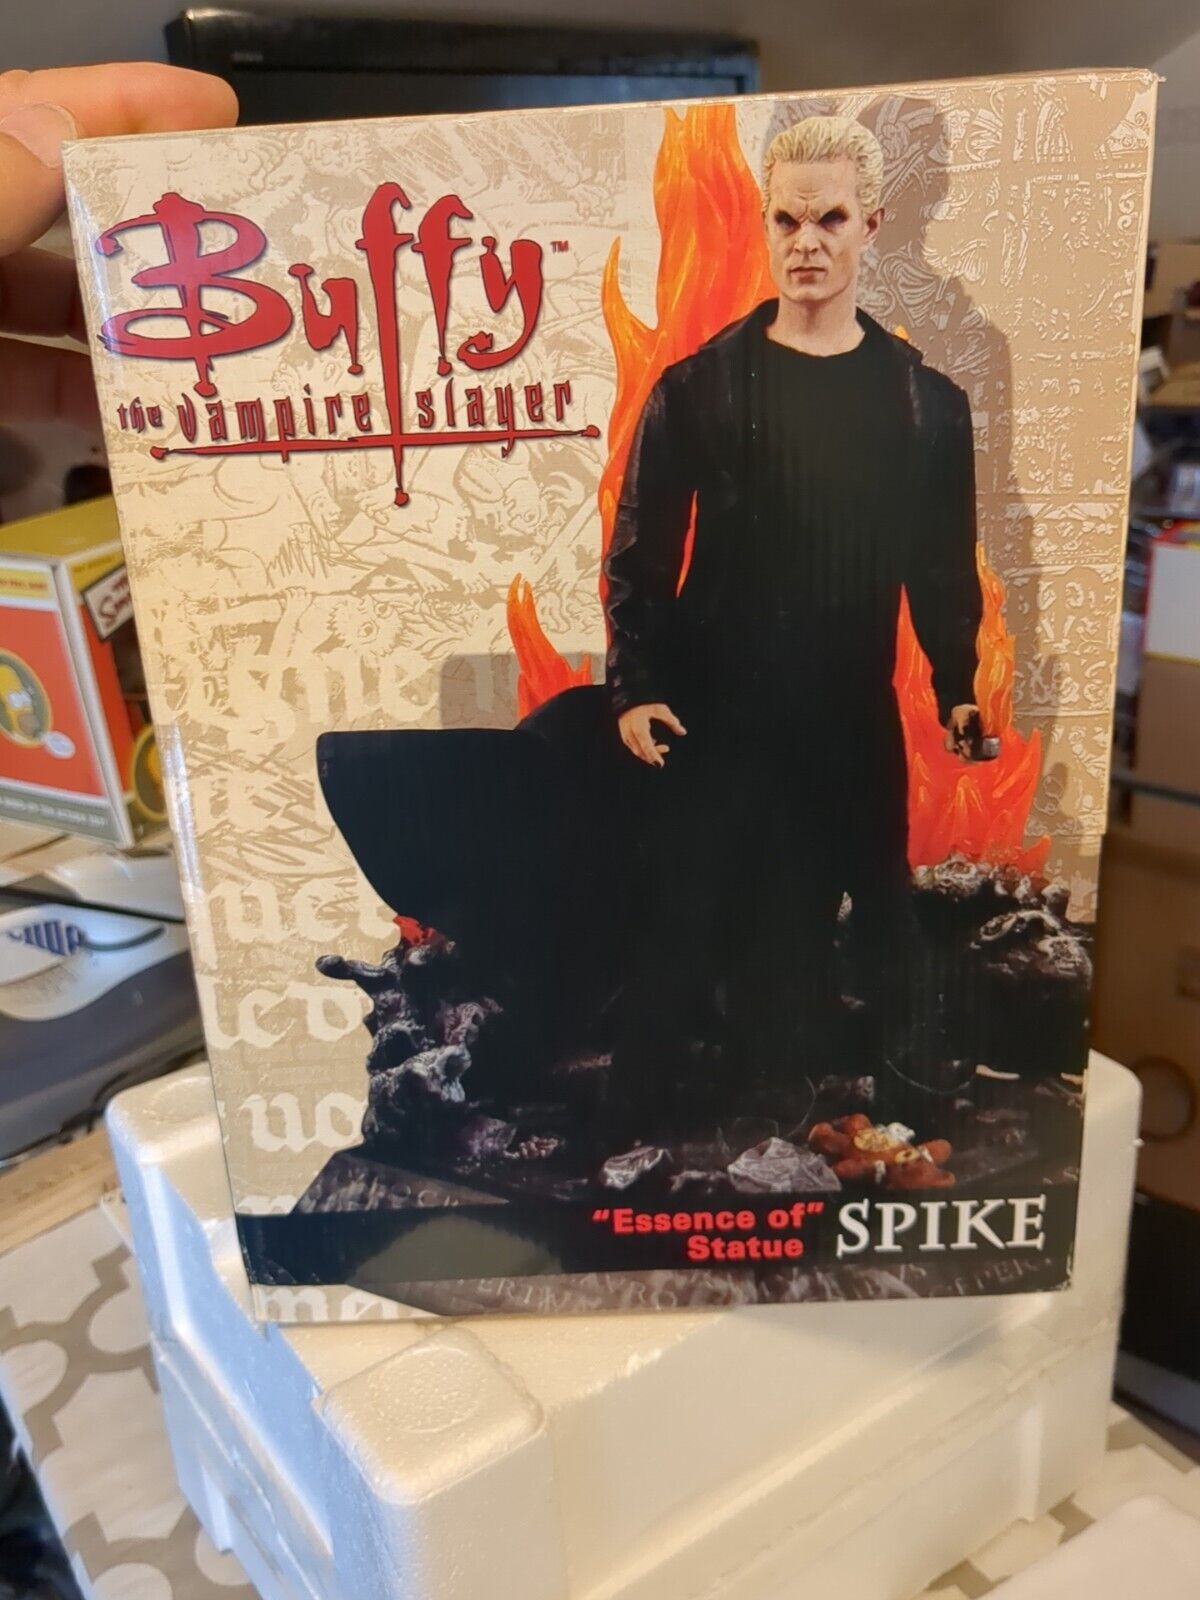 Buffy The Vampire Slayer. Essence Of Statue SPIKE. By Diamond 